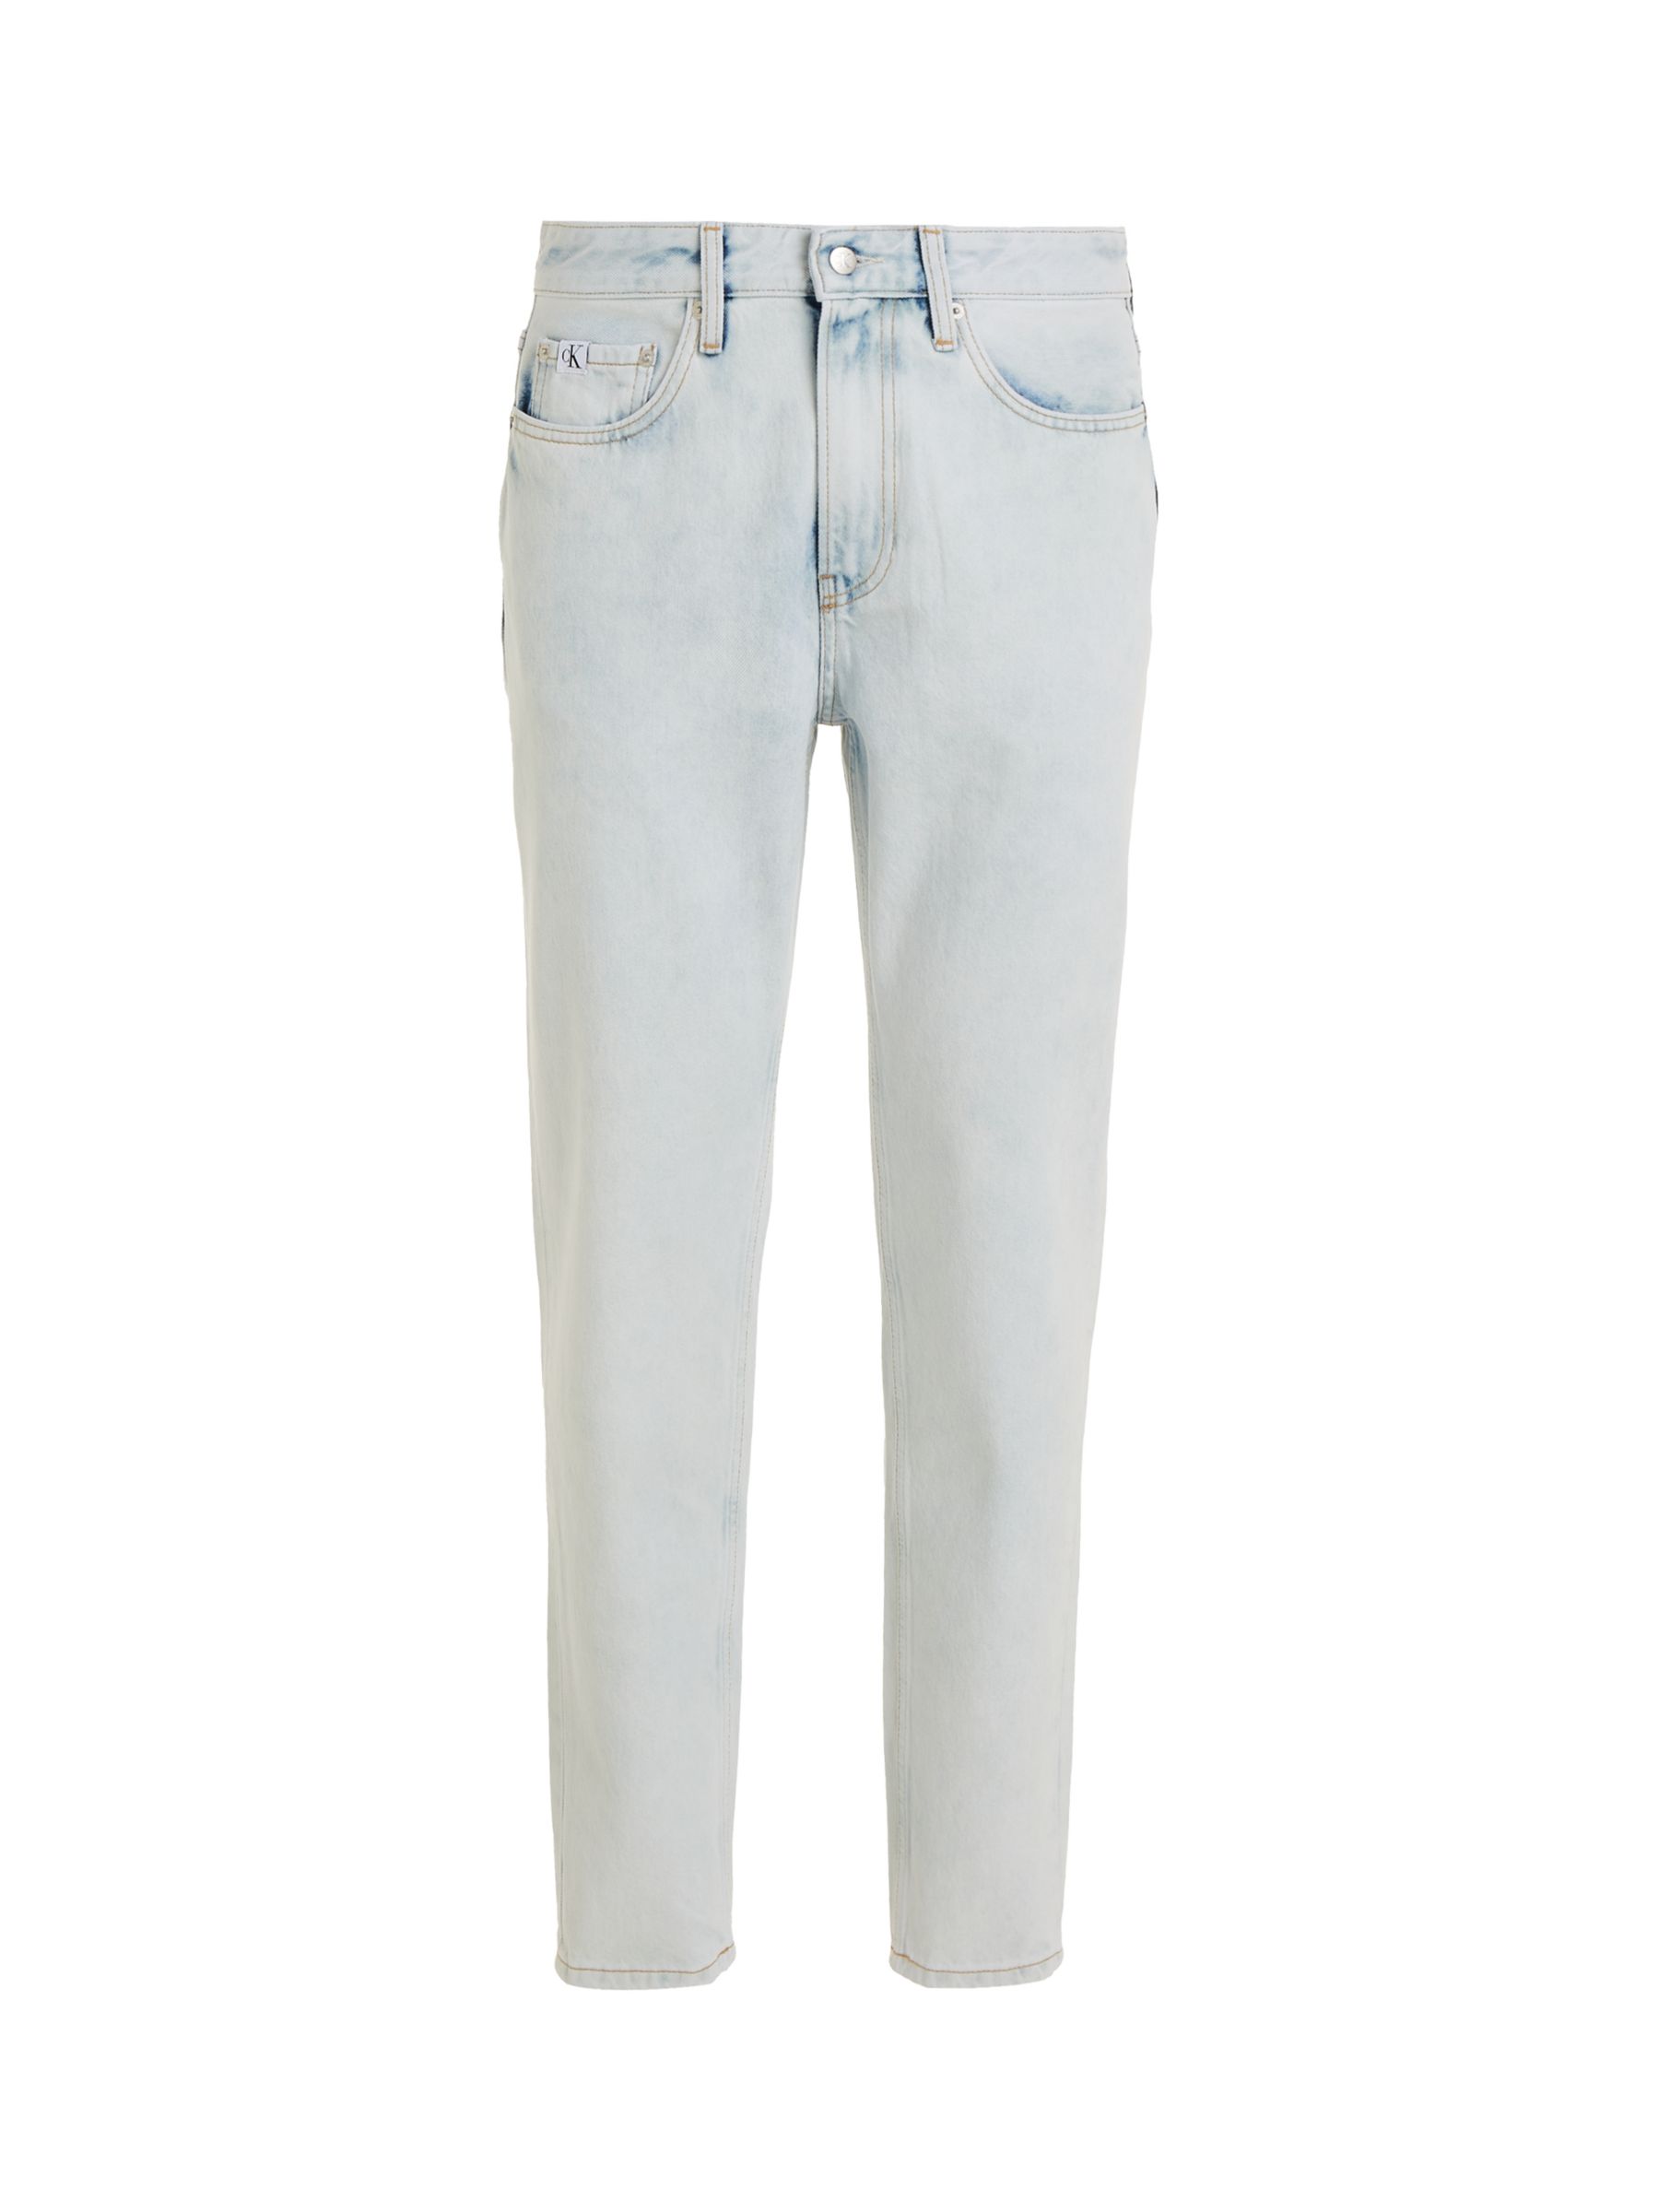 Calvin Klein Jeans Tapered Jeans, Denim Light, 28R